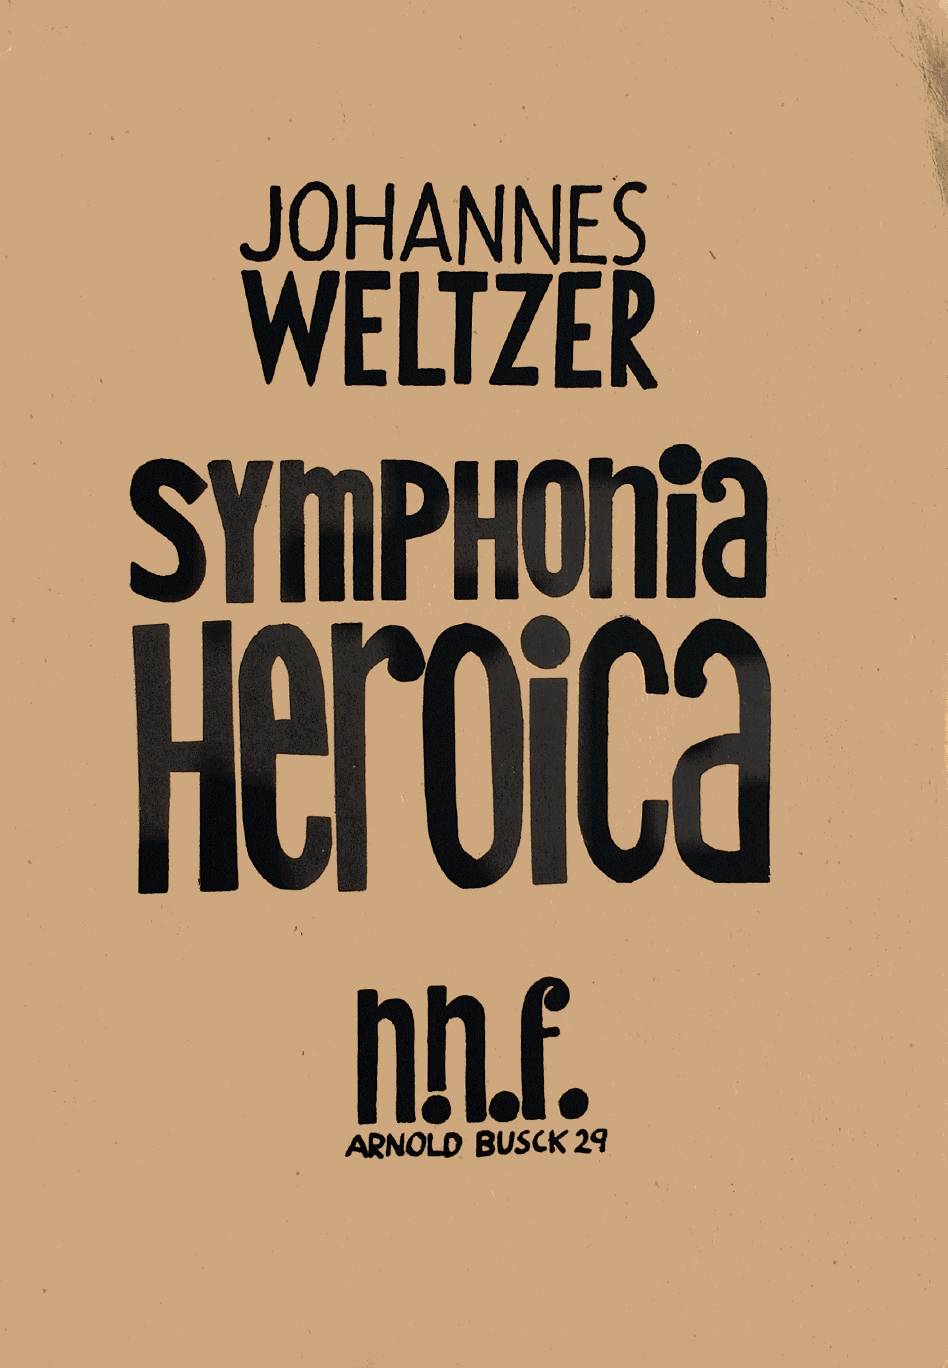 Johannes Weltzer, "Symphonia Heroica"